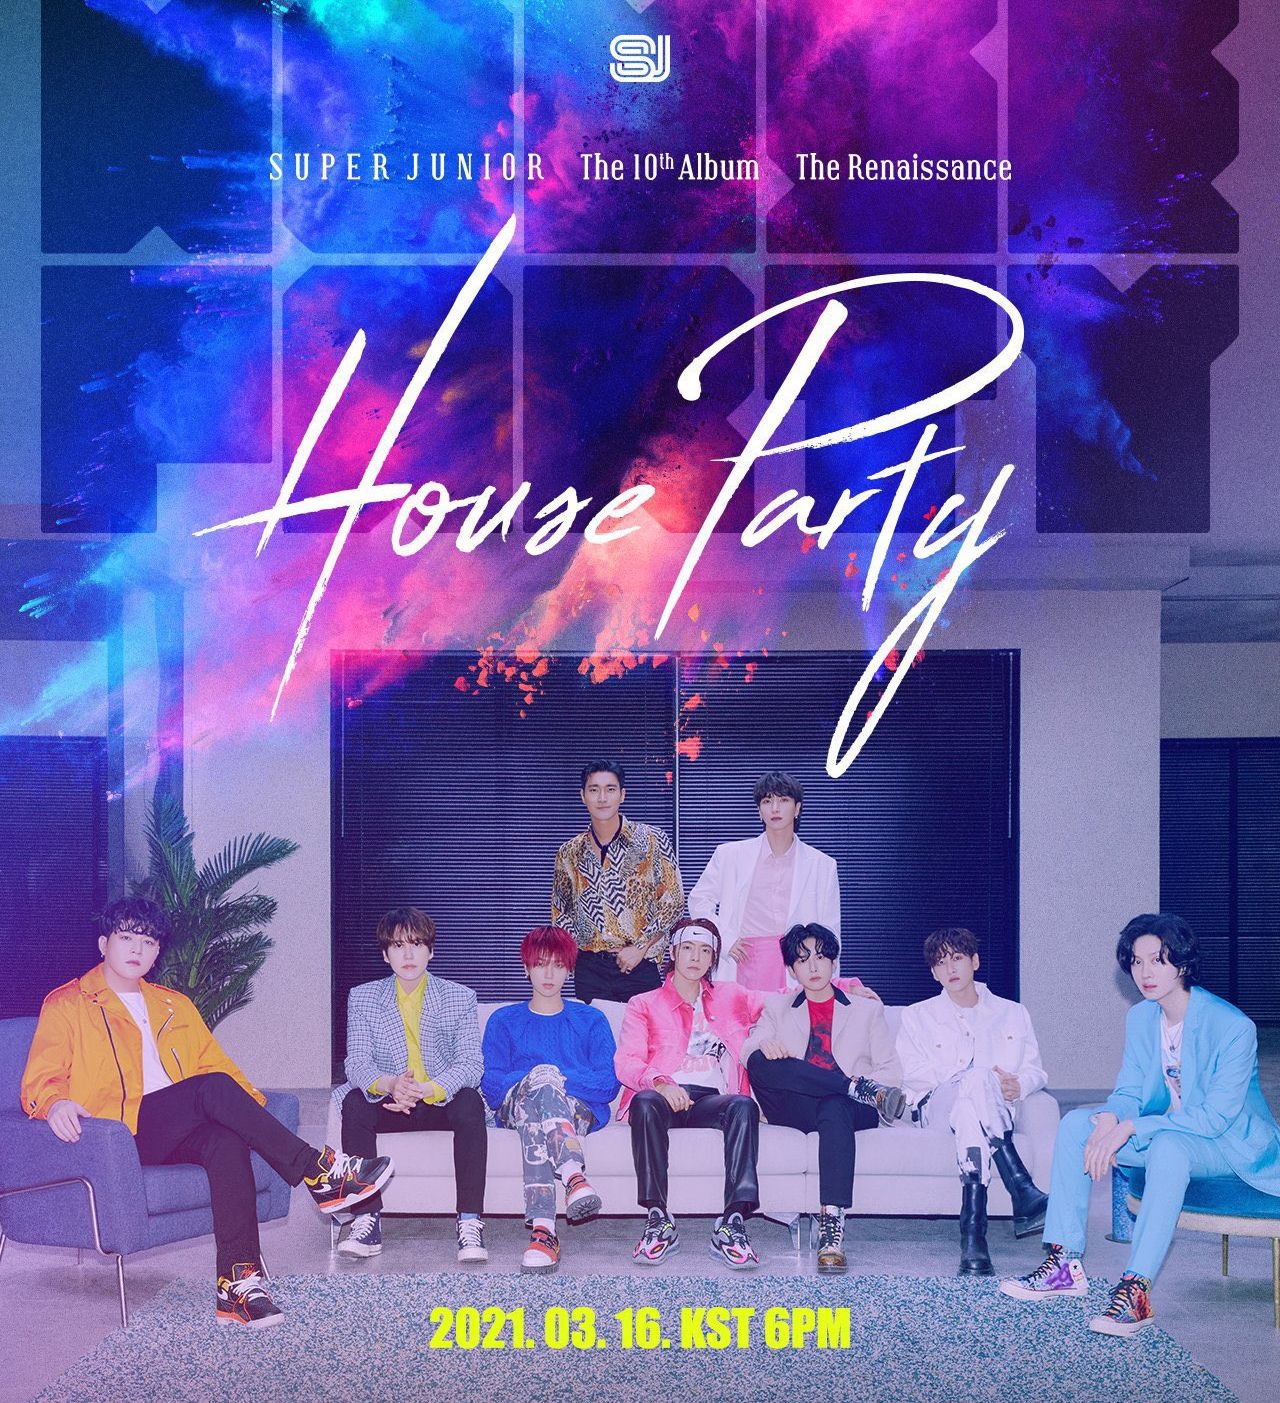 House party - Super Junior